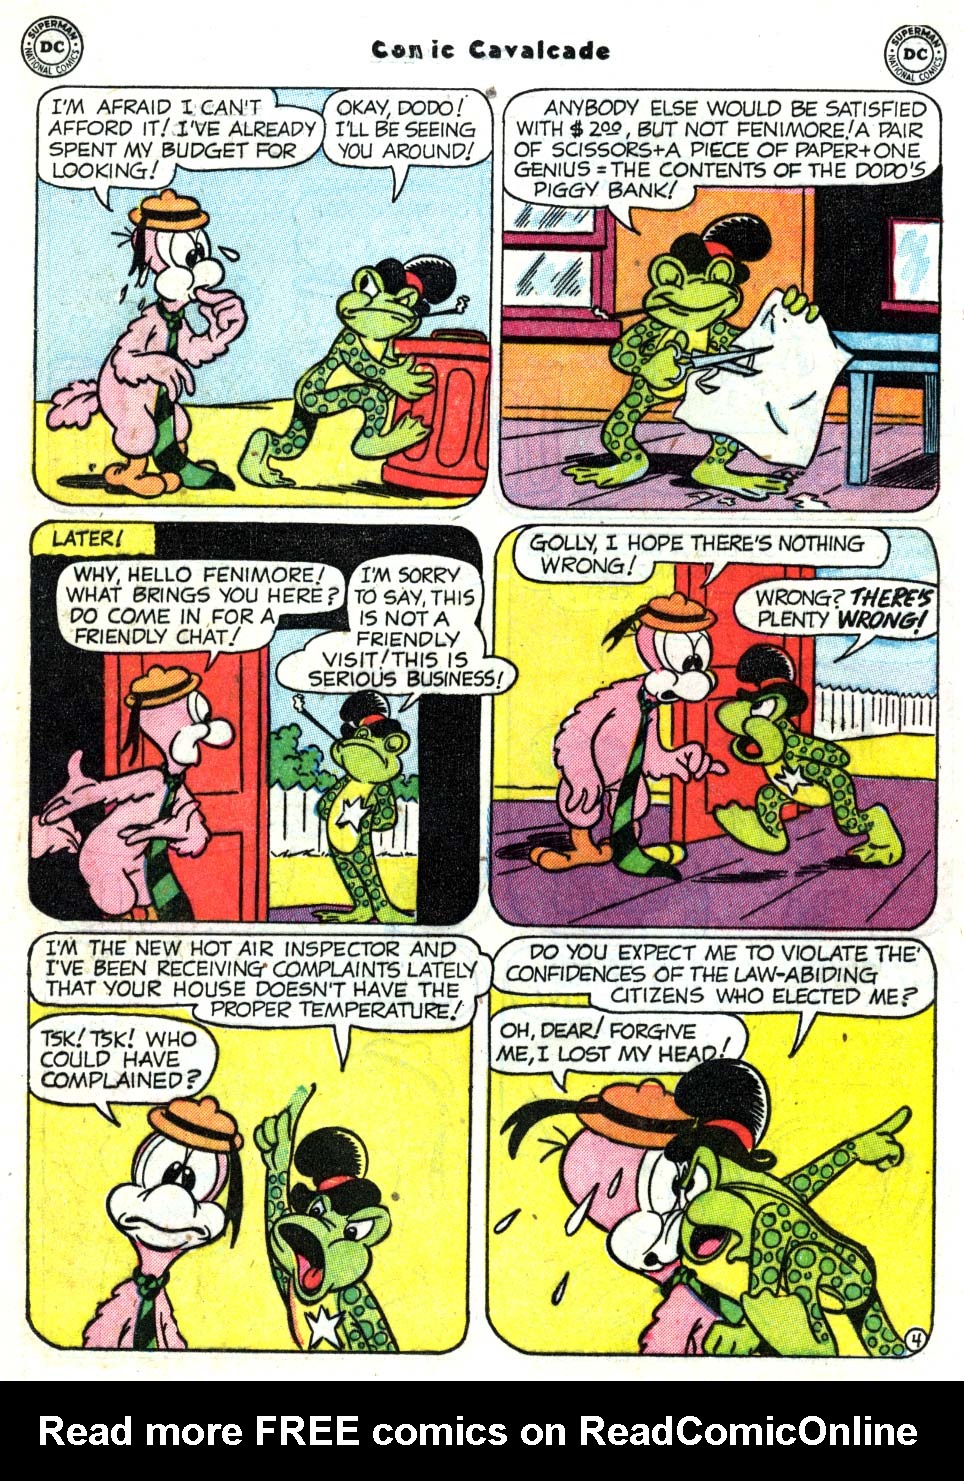 Comic Cavalcade issue 46 - Page 36